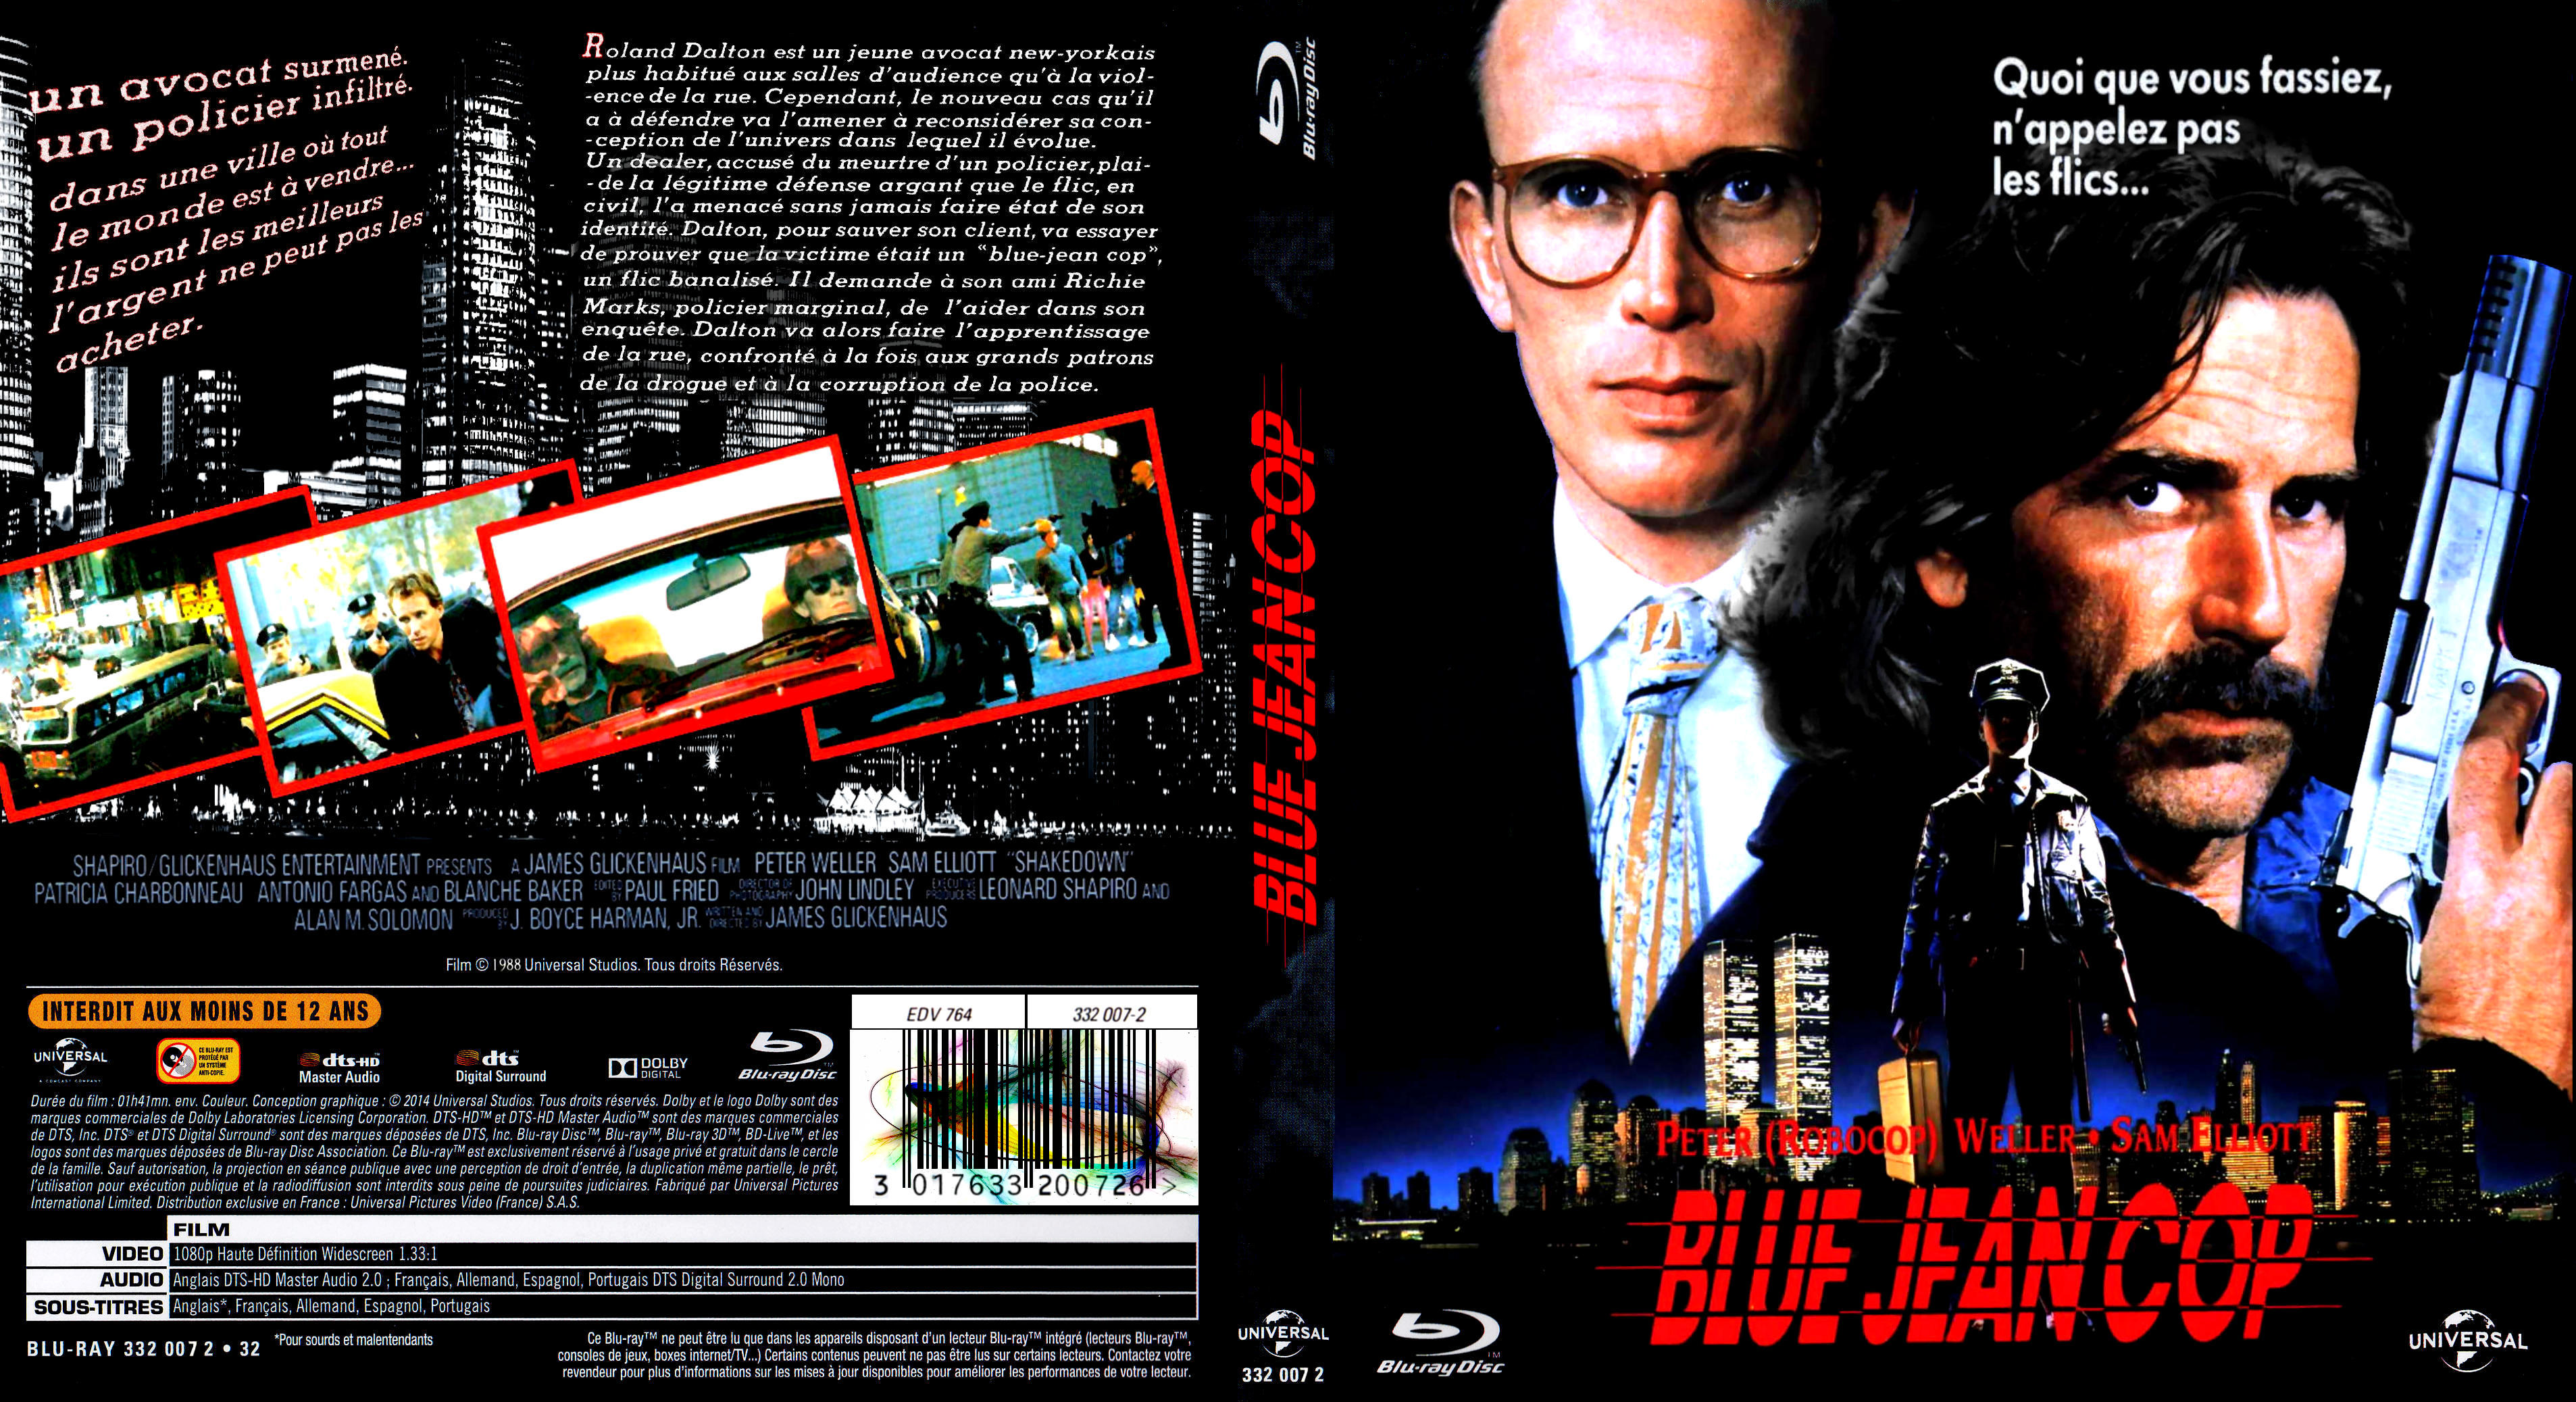 Jaquette DVD Blue jean cop custom (BLU-RAY)